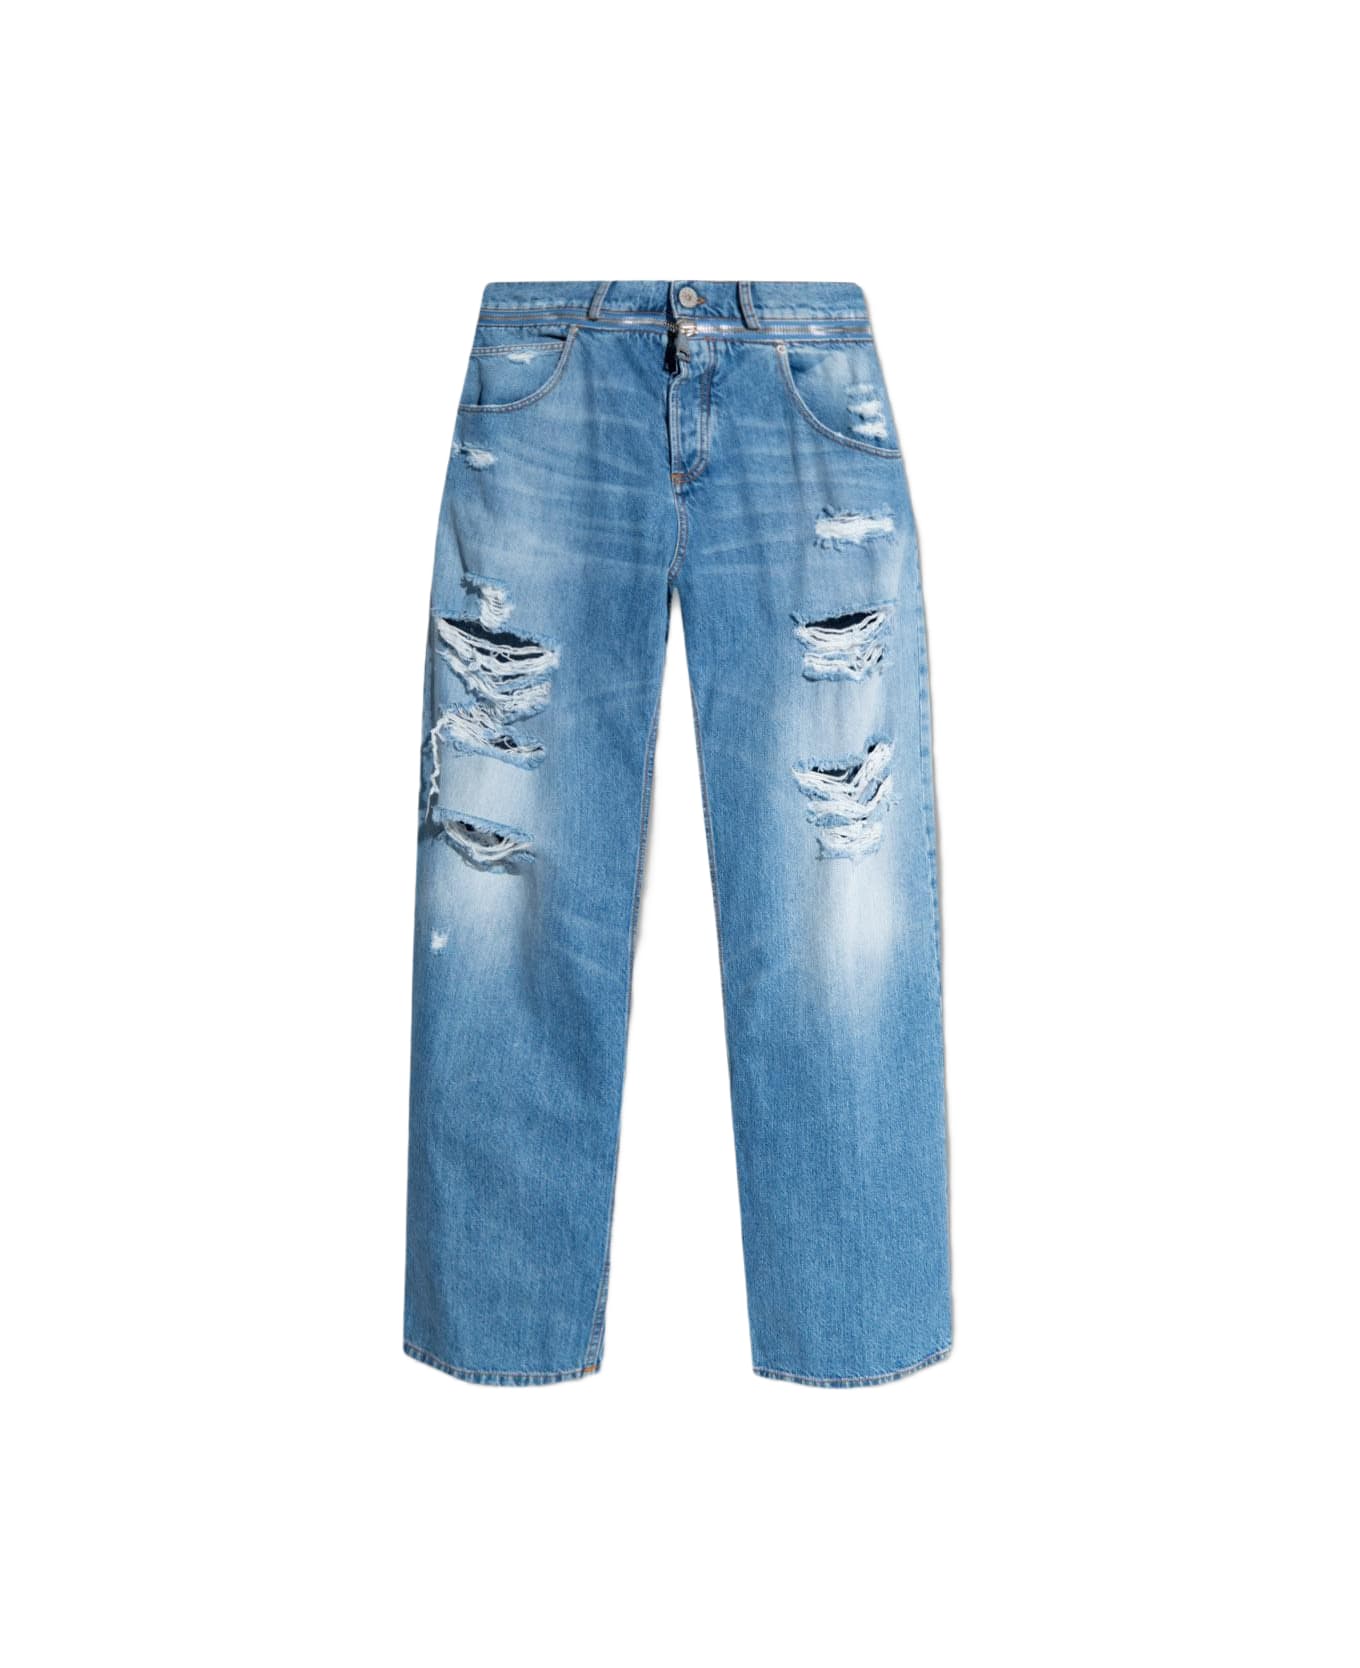 Balmain Jeans With Vintage Effect - Denim